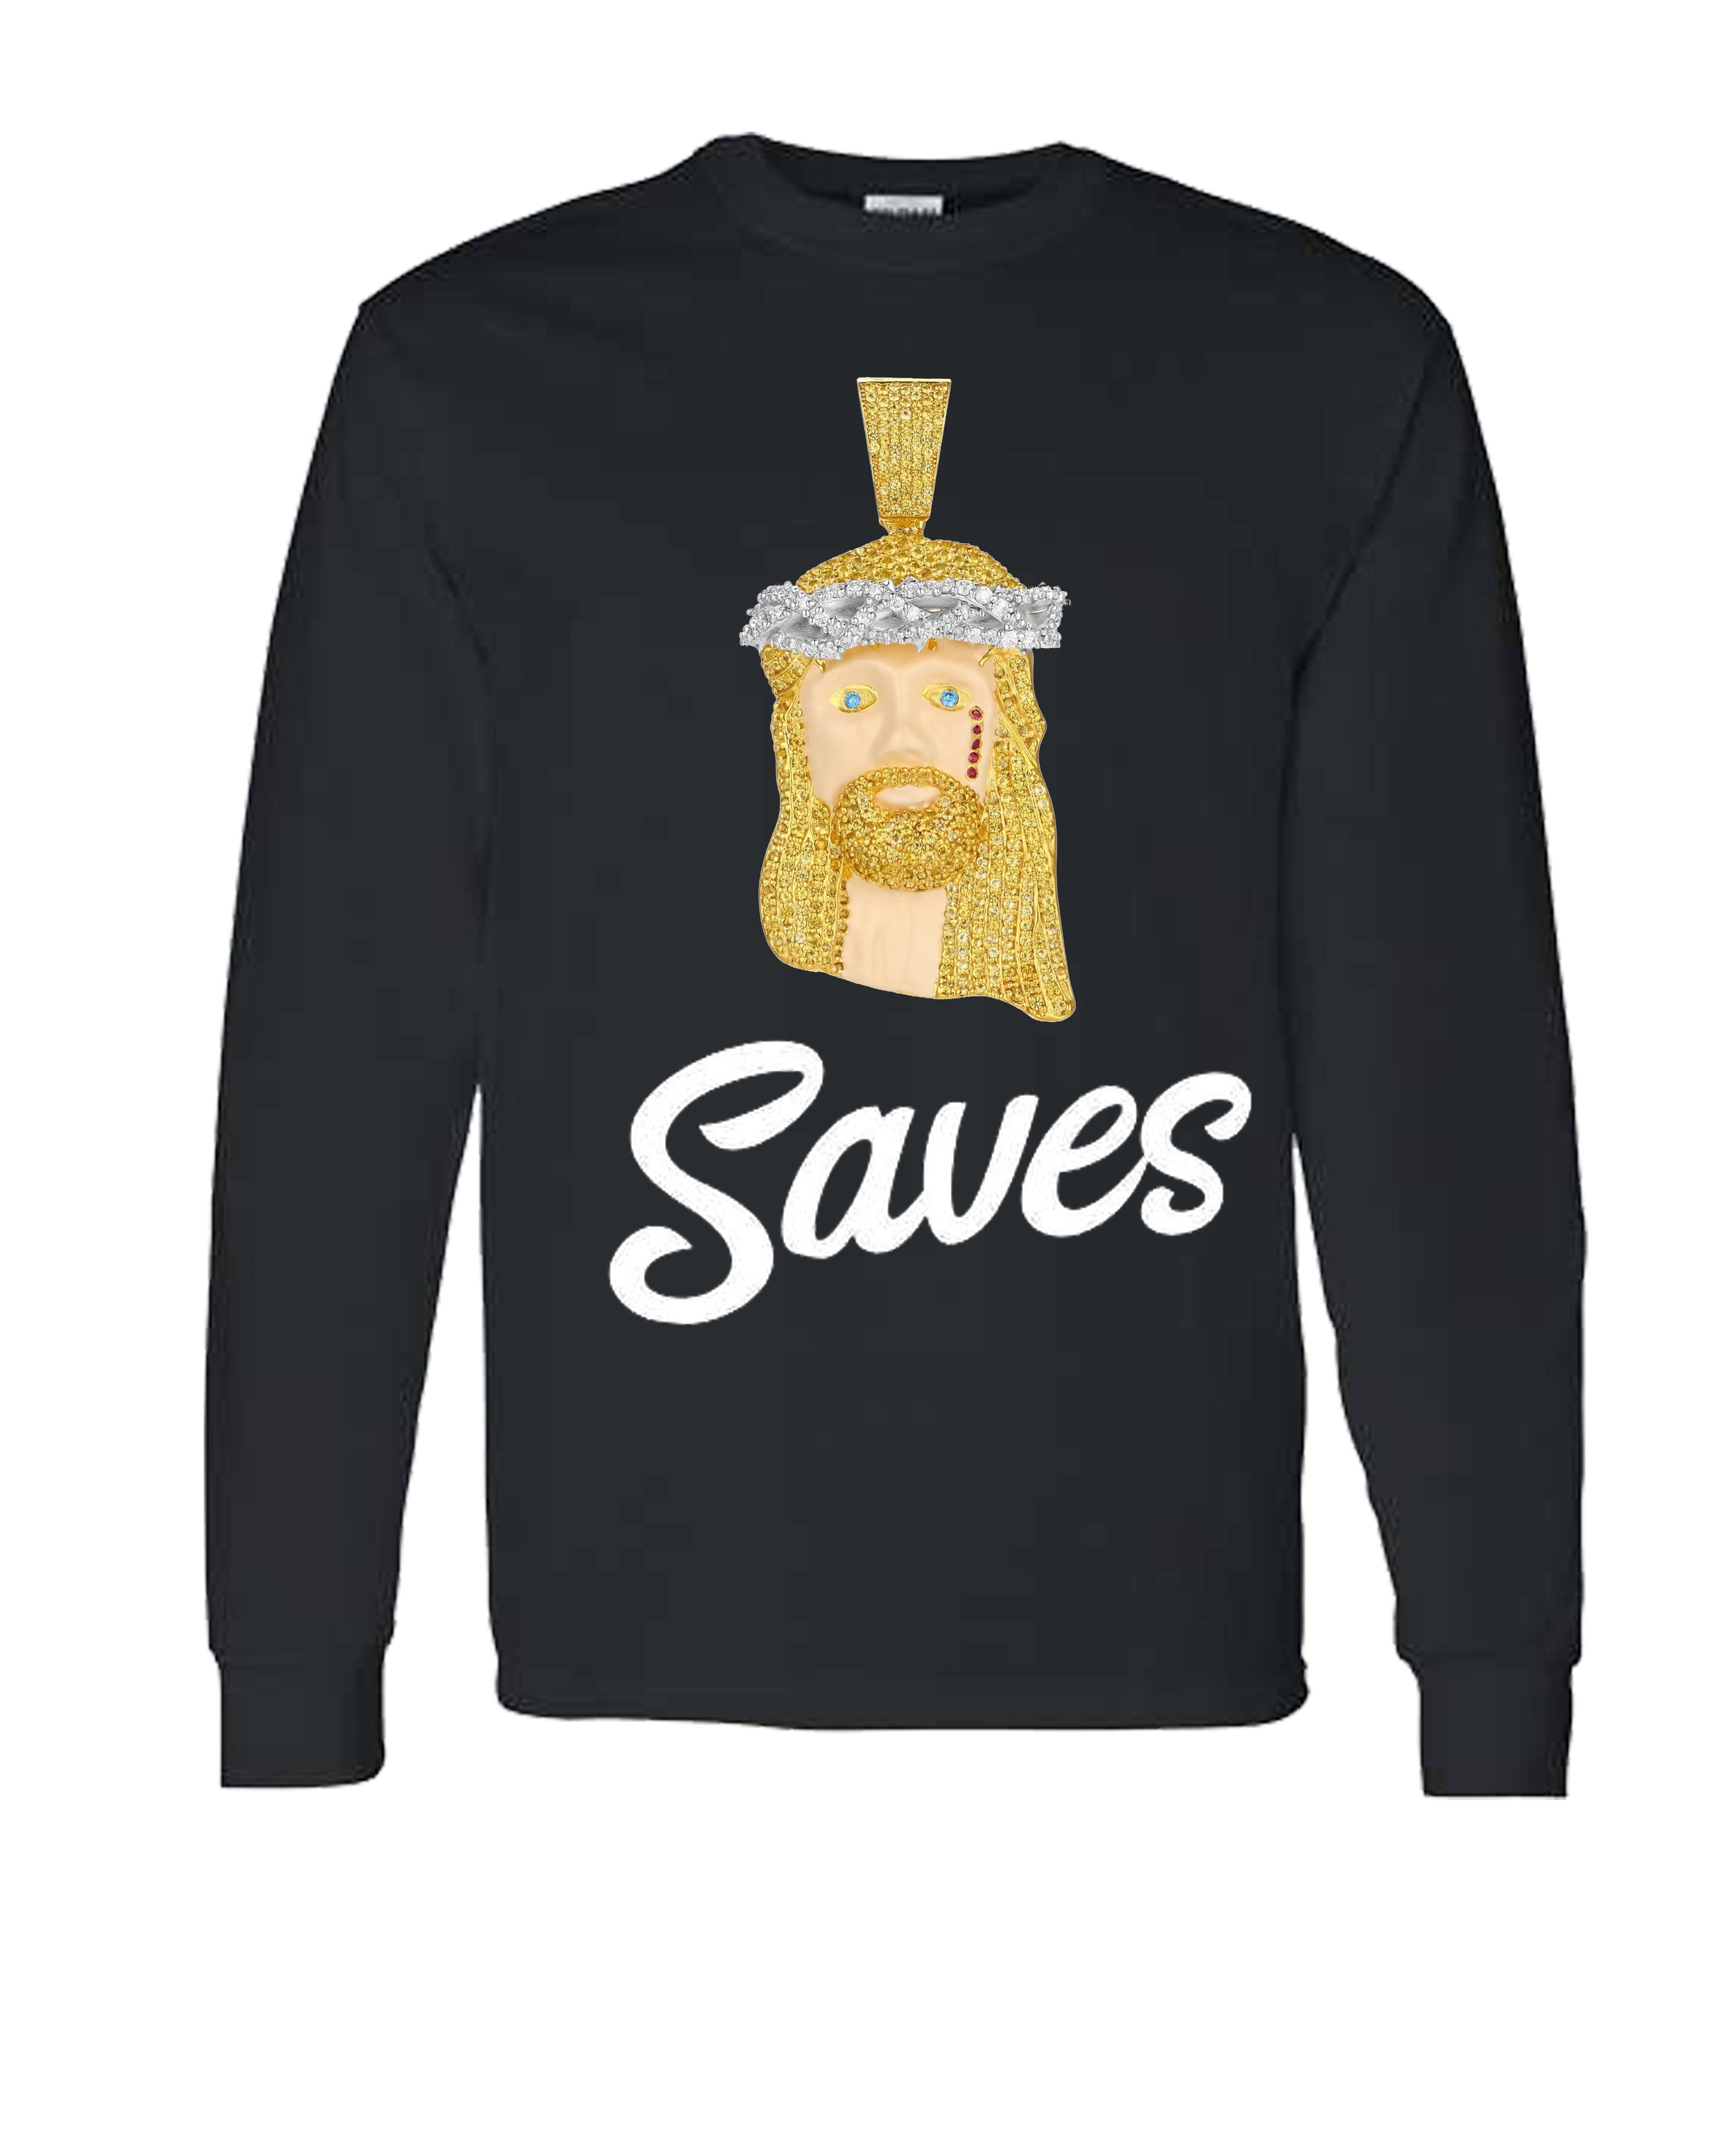 Jesus(Piece) Saves Long Sleeve T-Shirt